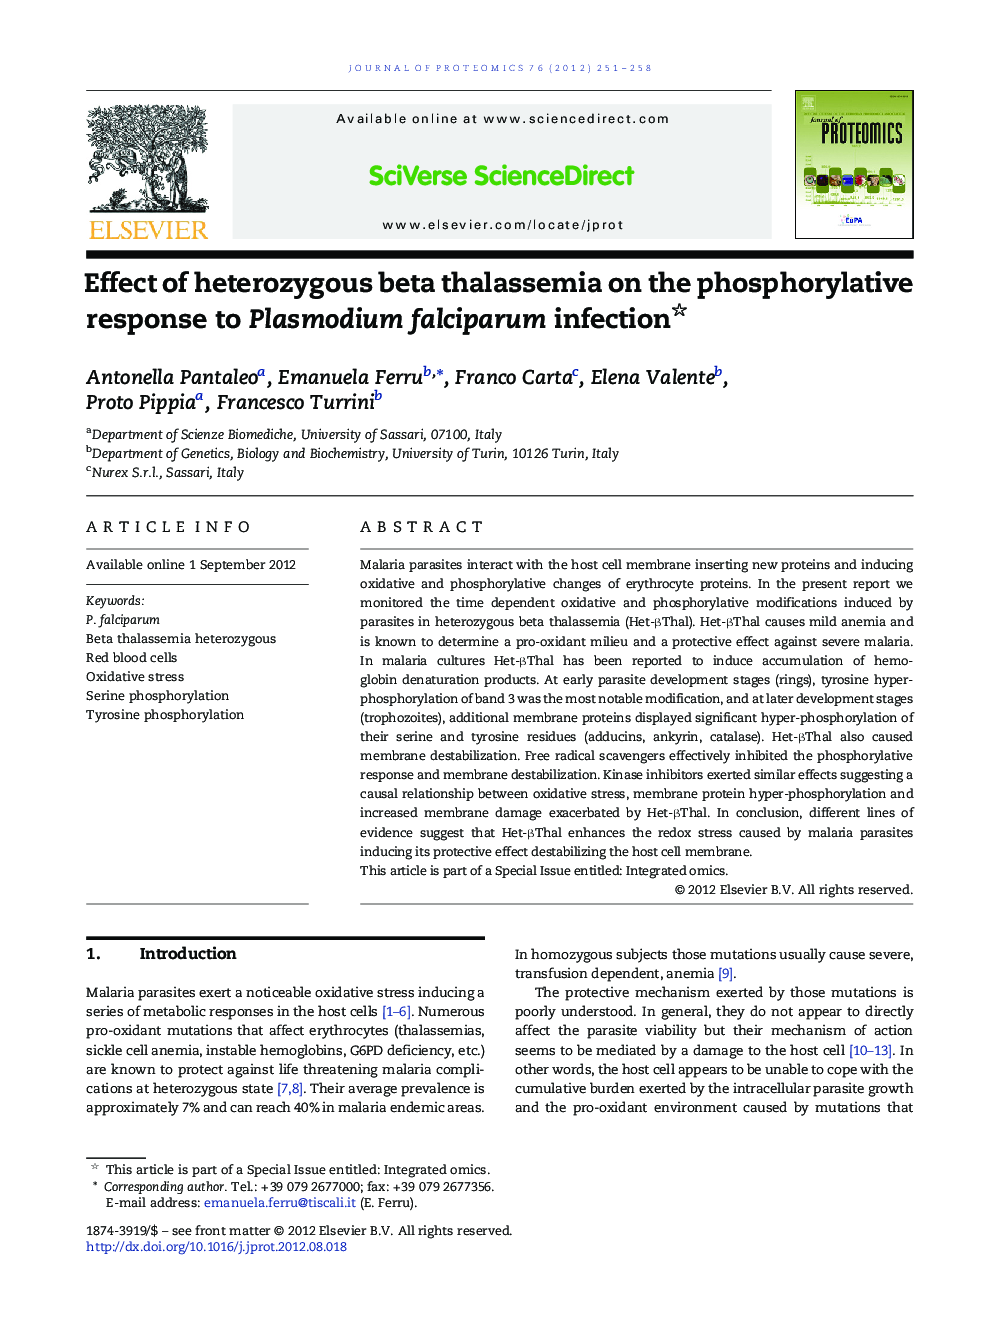 Effect of heterozygous beta thalassemia on the phosphorylative response to Plasmodium falciparum infection